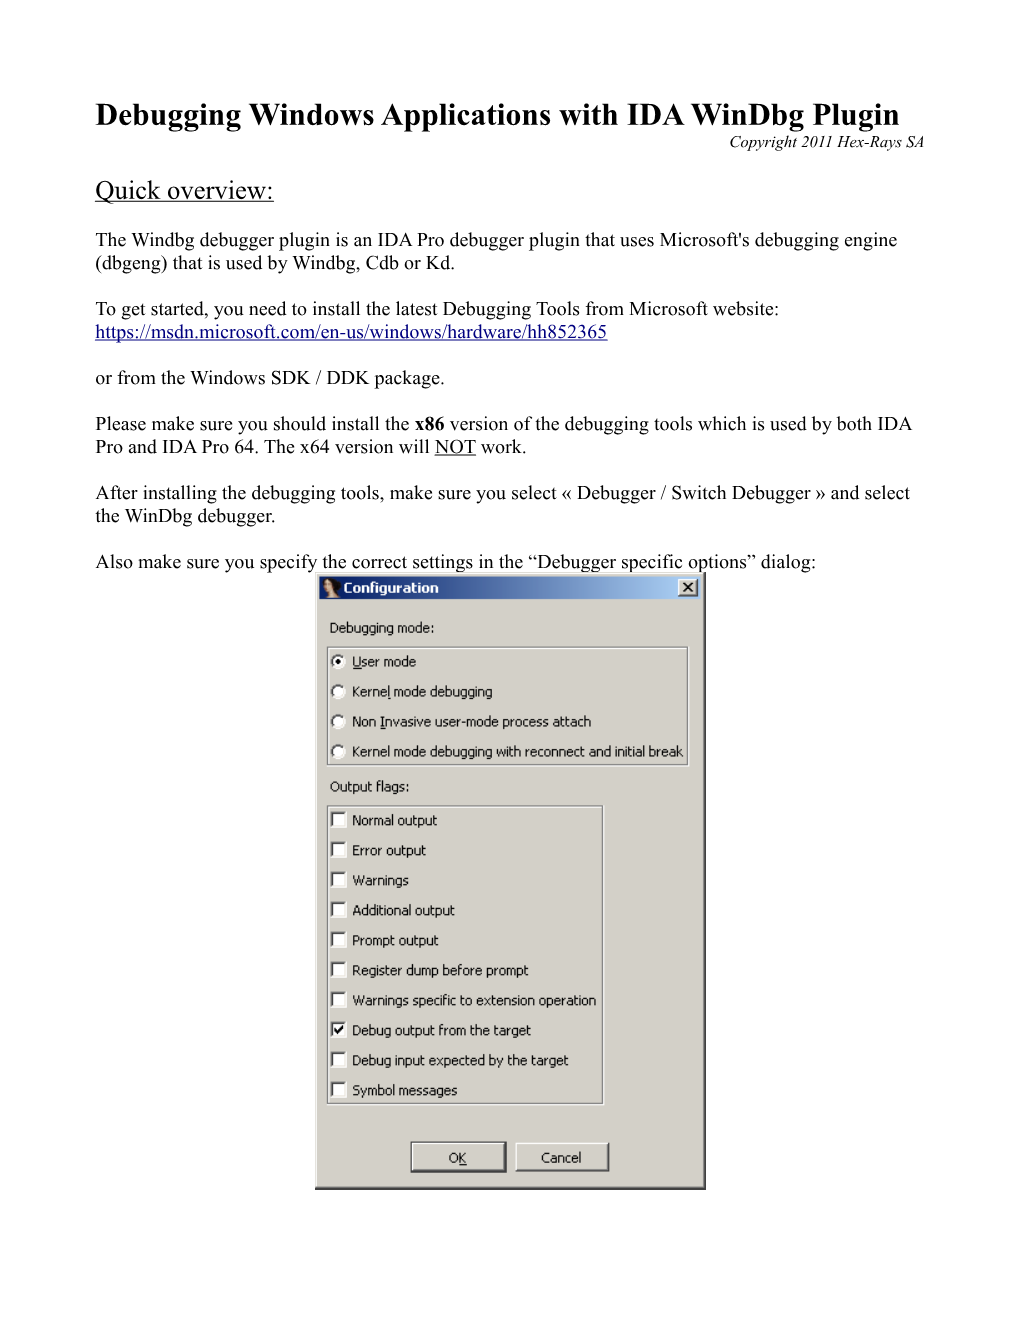 Windbg Debugger Plugin Is an IDA Pro Debugger Plugin That Uses Microsoft's Debugging Engine (Dbgeng) That Is Used by Windbg, Cdb Or Kd